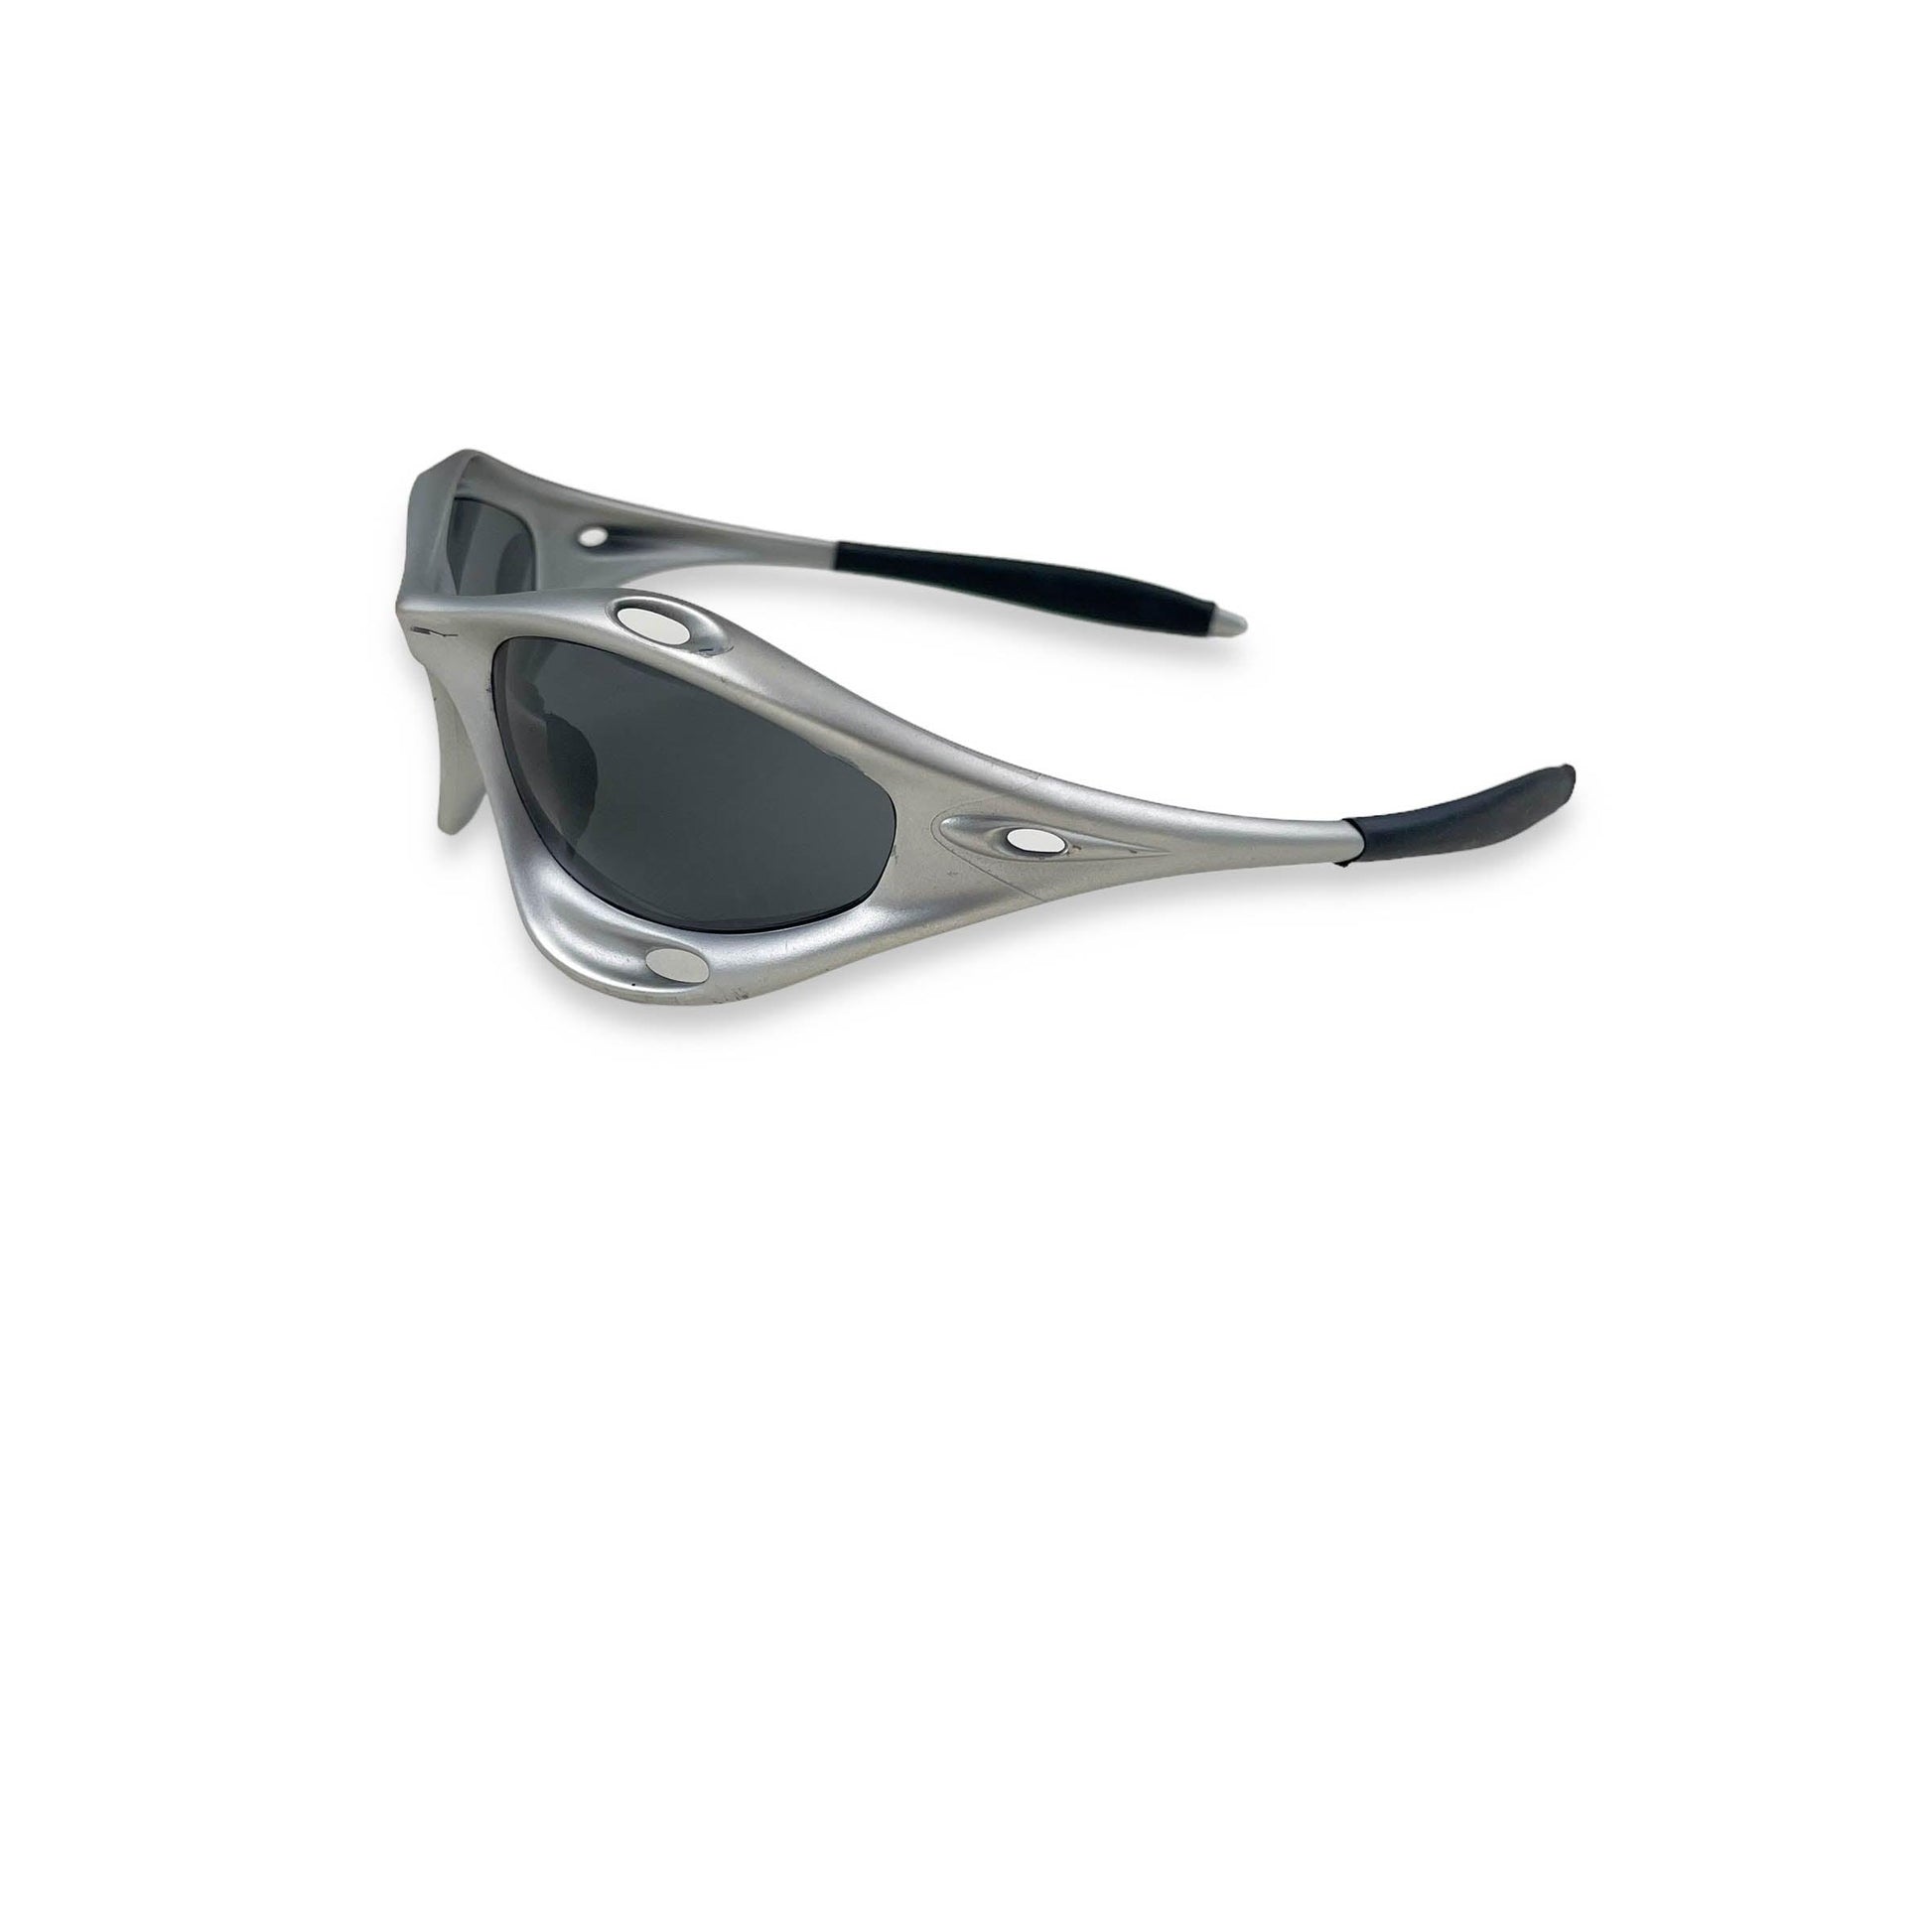 Vintage Oakley Racing Jacket Sunglasses - Known Source